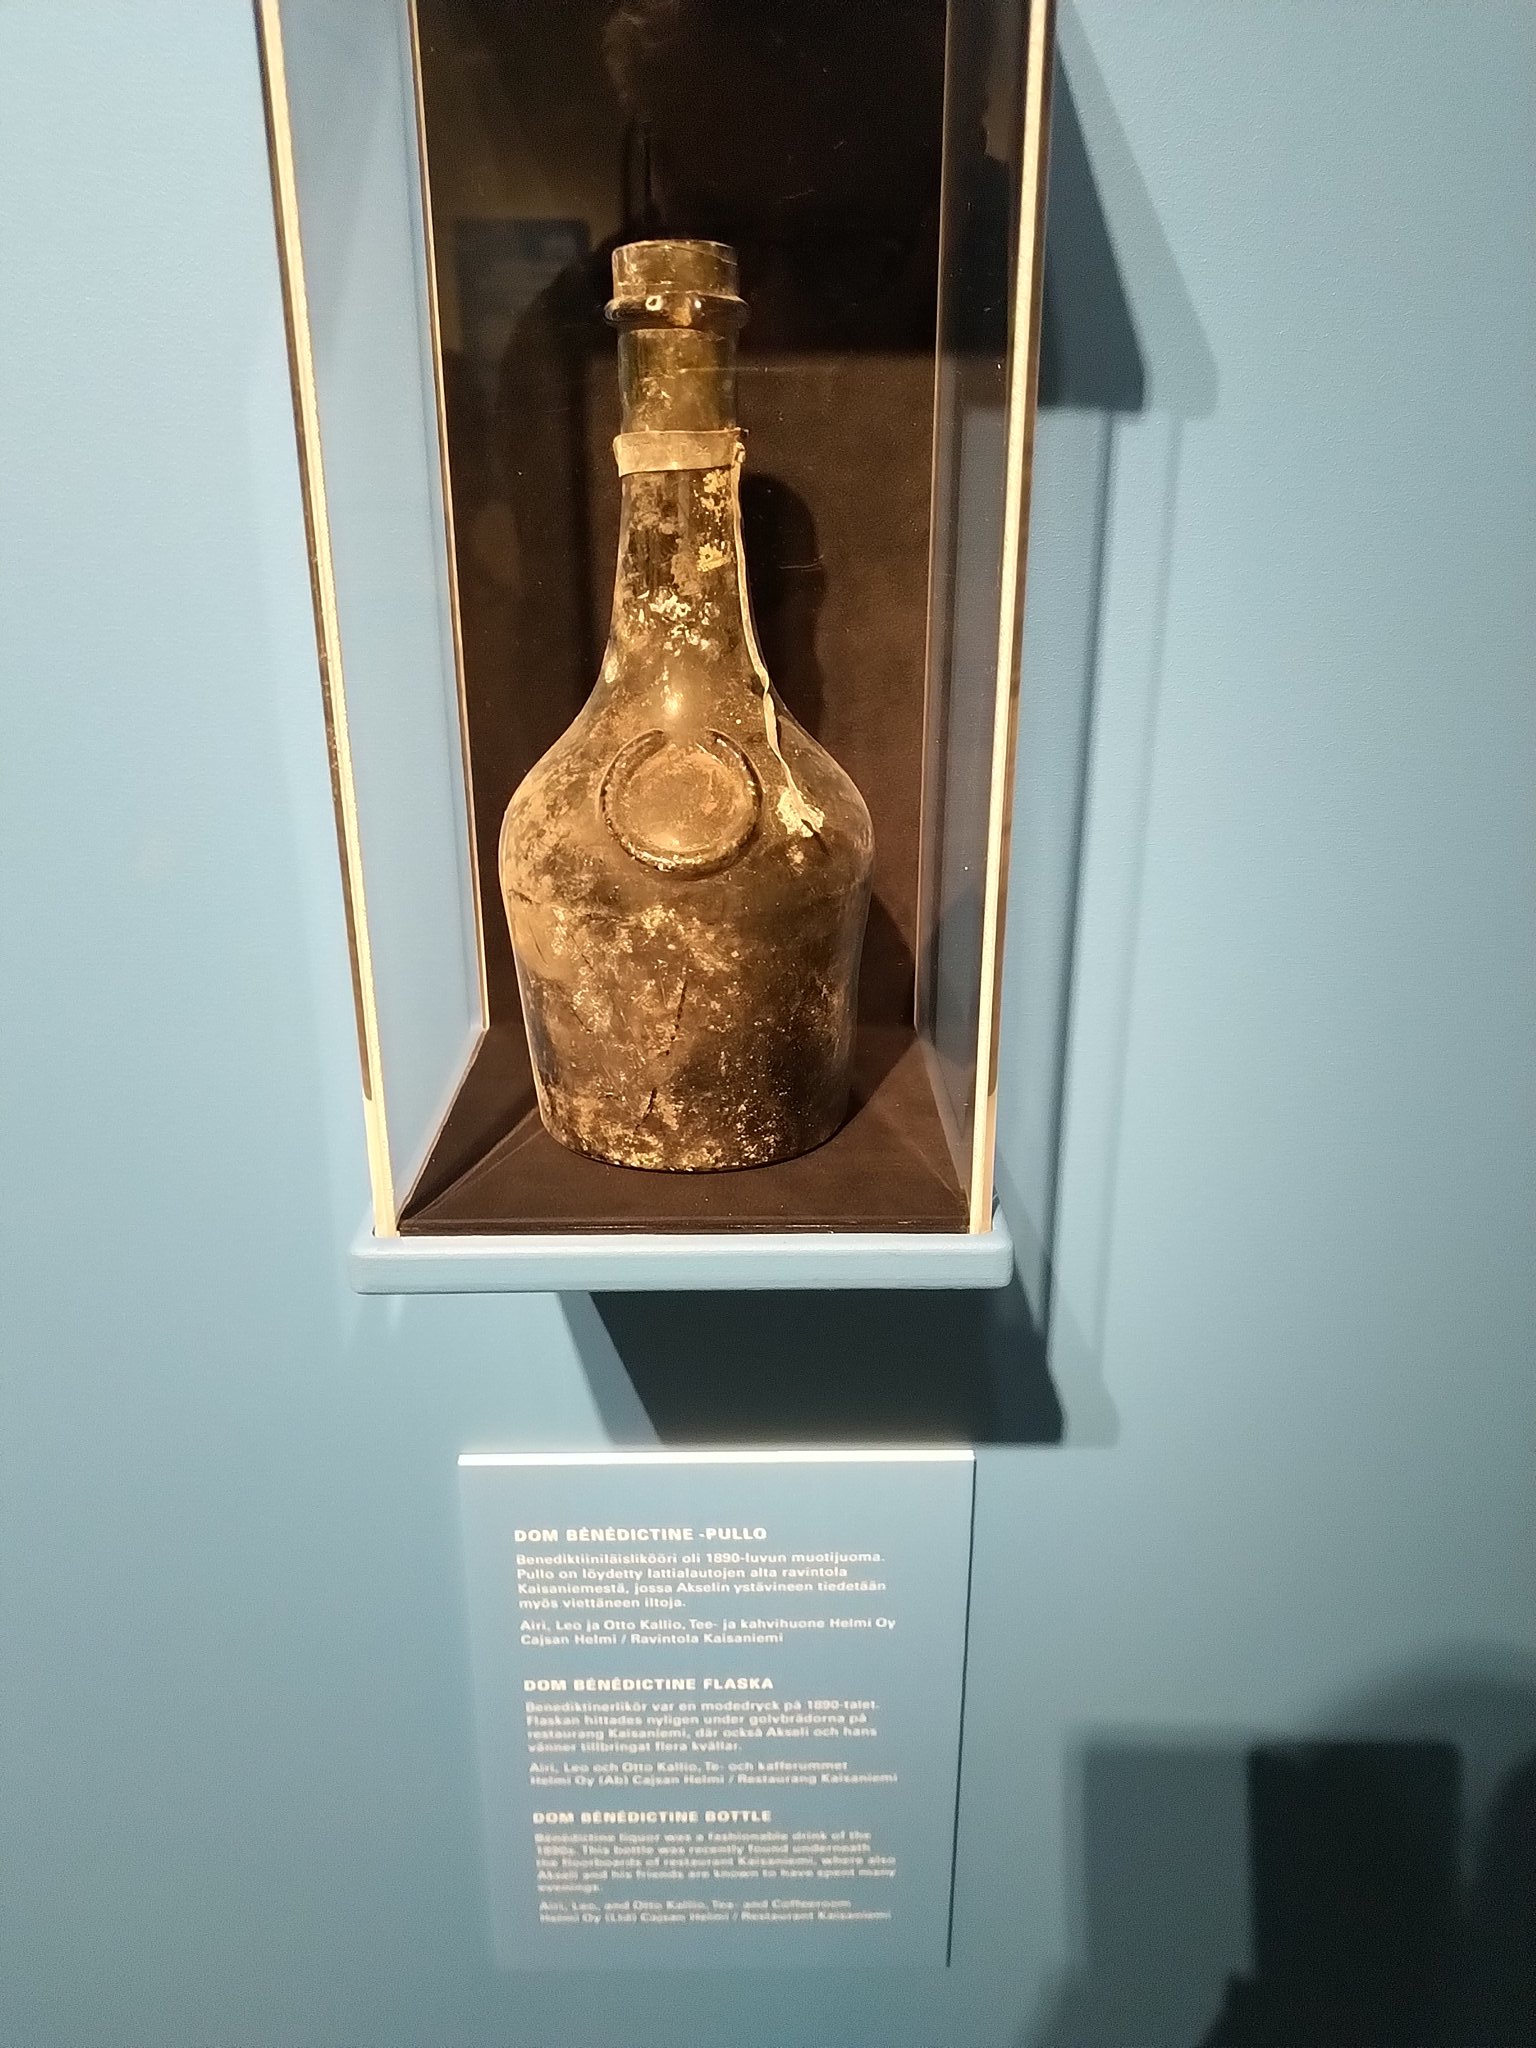 Sibelius bottle goes to national museum